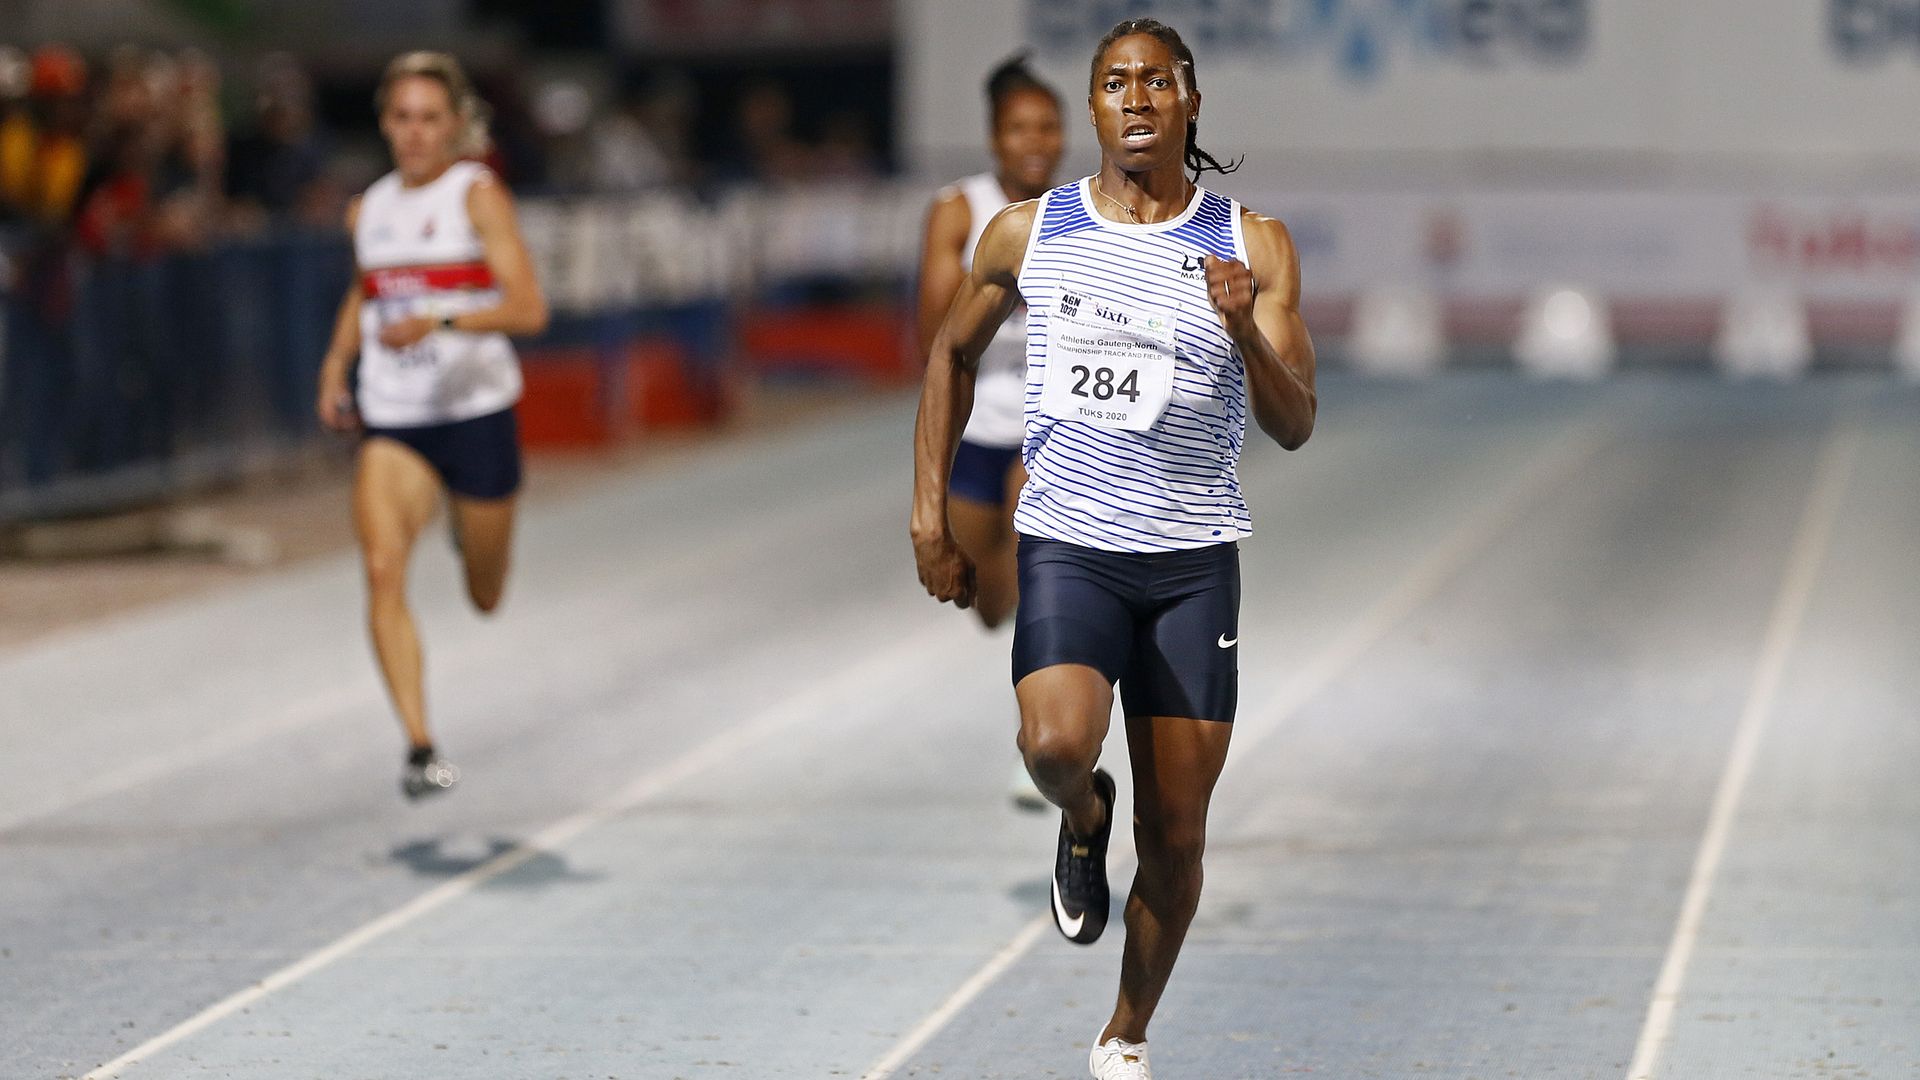 Caster Semenya runs ahead of other women in a race